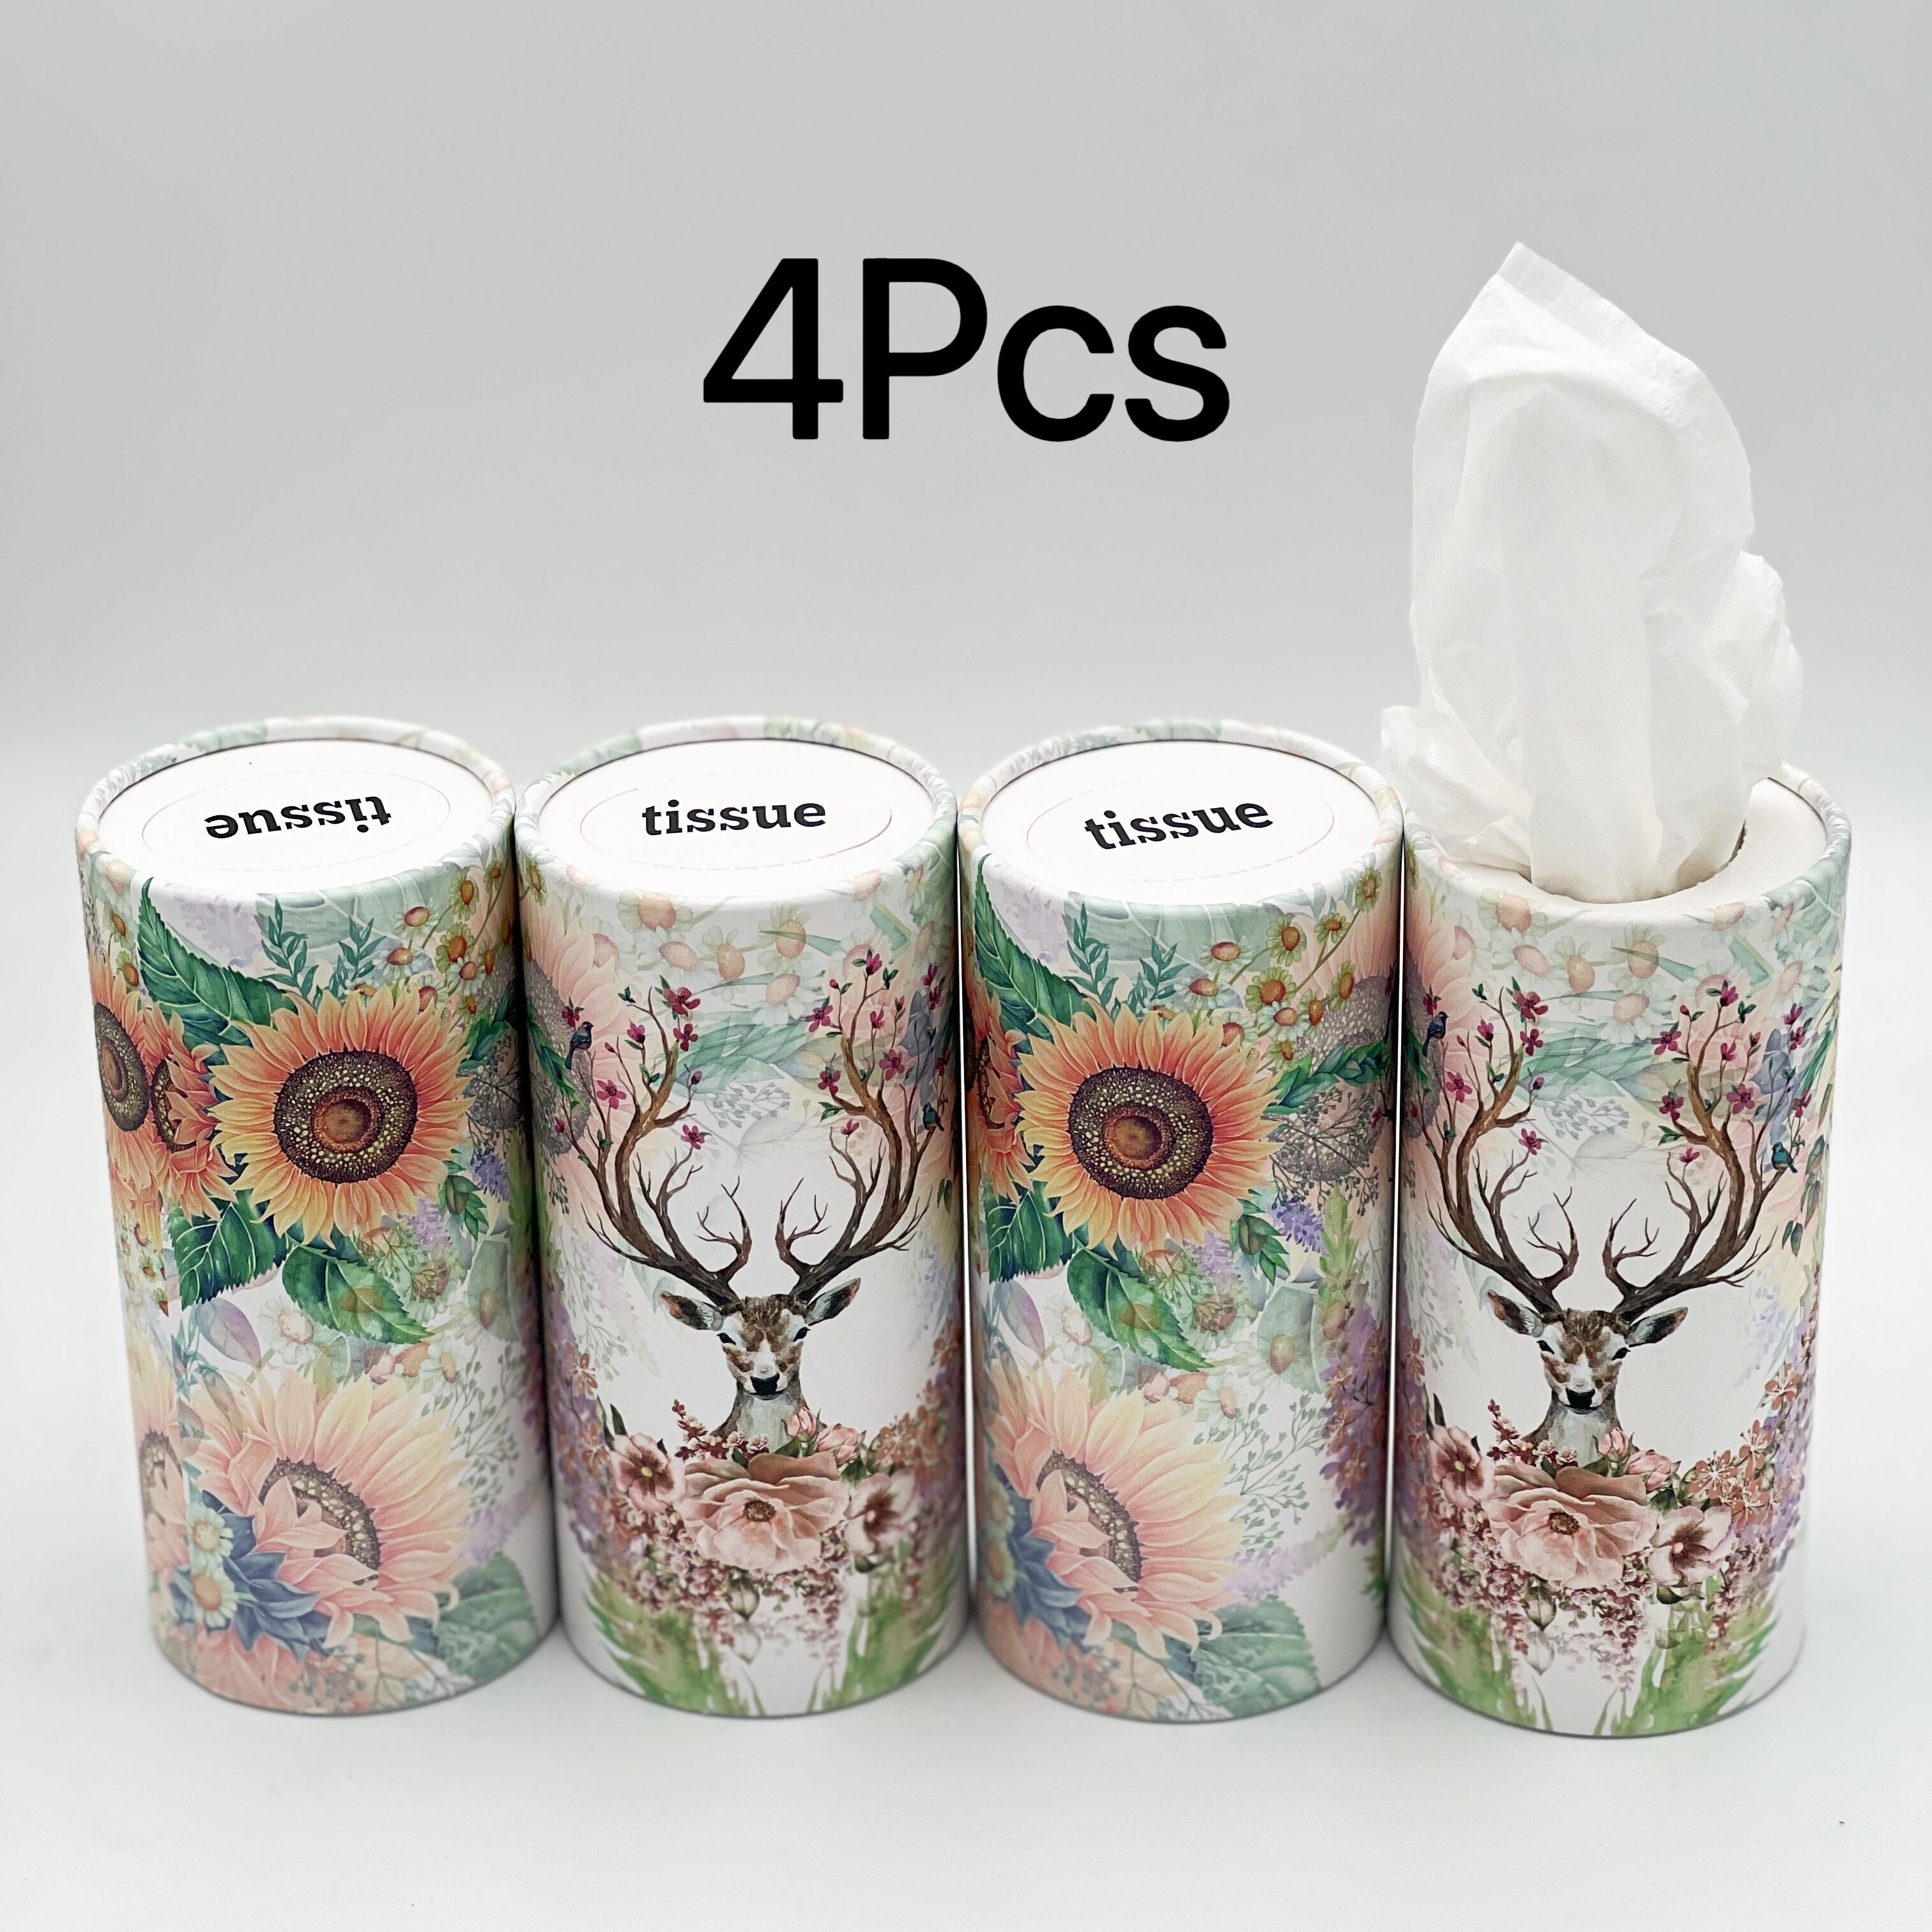 4pcs Pack Car Tissue Holder With Facial Tissues Bulk Tissue For